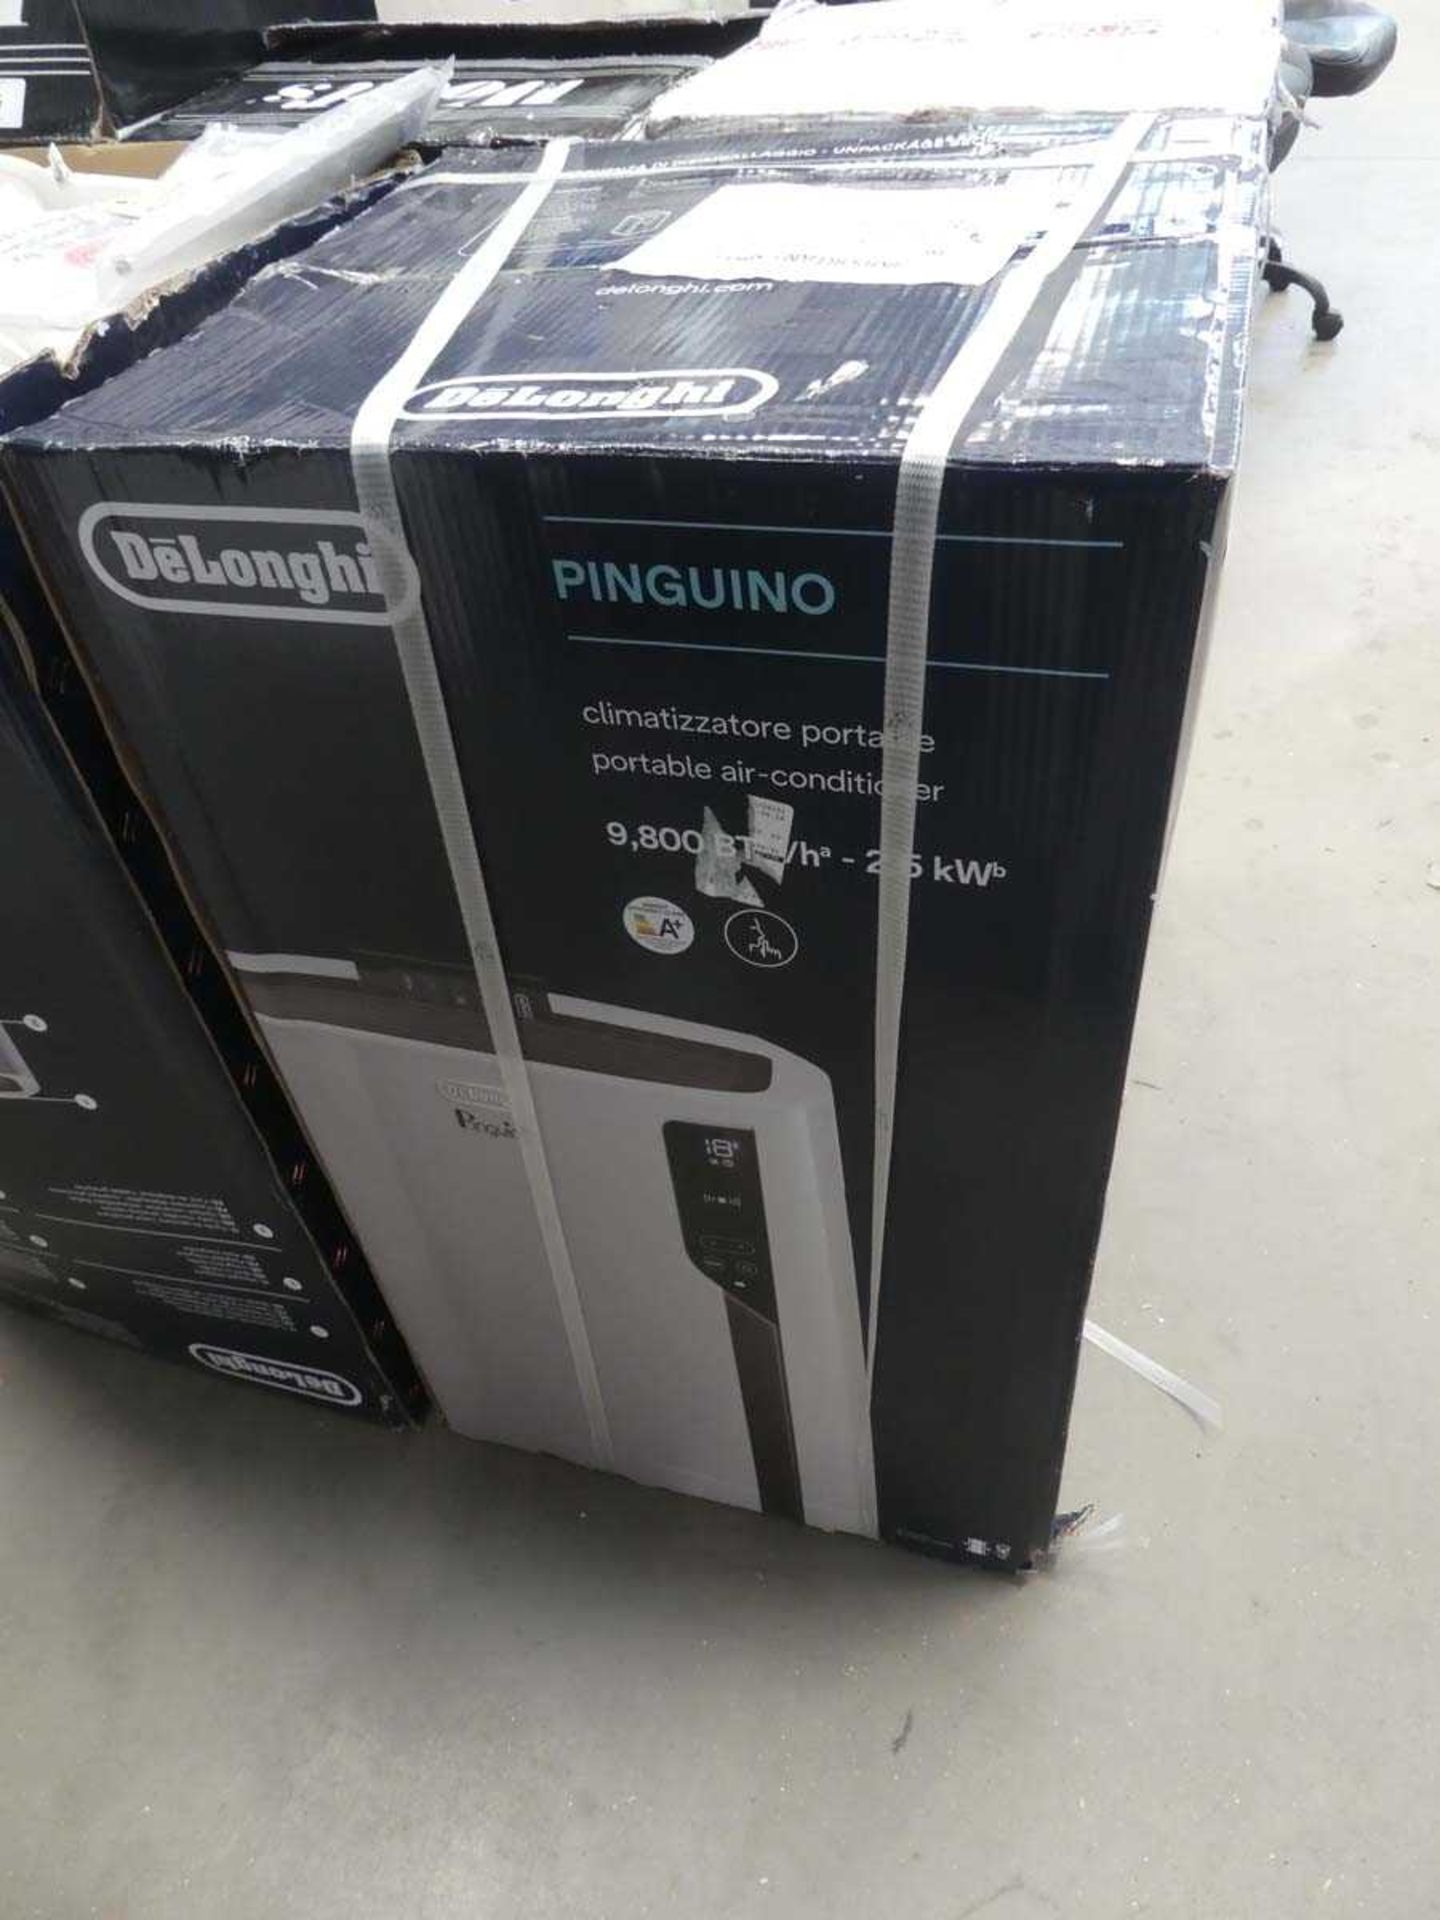 +VAT Boxed Delonghi Pinguino air conditioning unit